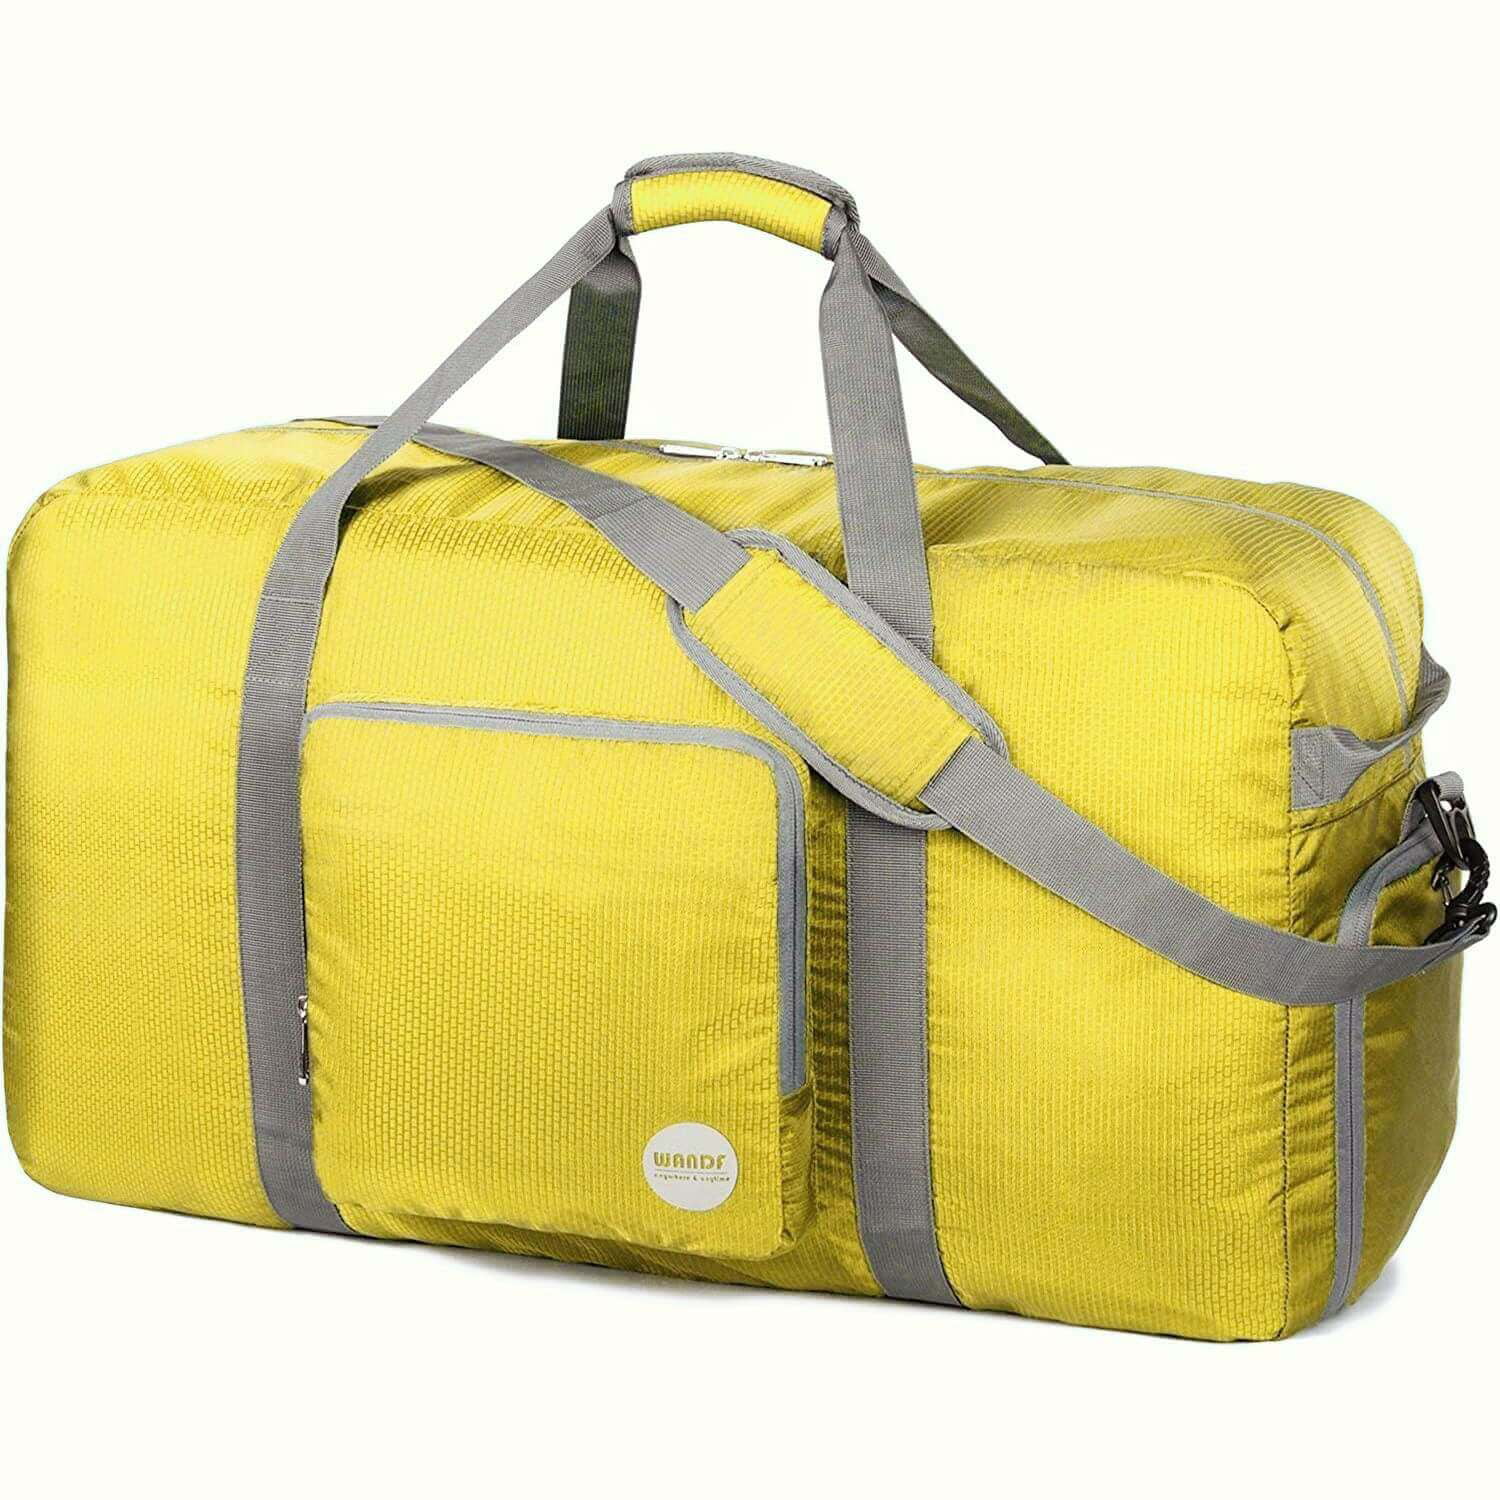 Travel Luggage Duffle Bag Lightweight Portable Handbag Noodles Large Capacity Waterproof Foldable Storage Tote 